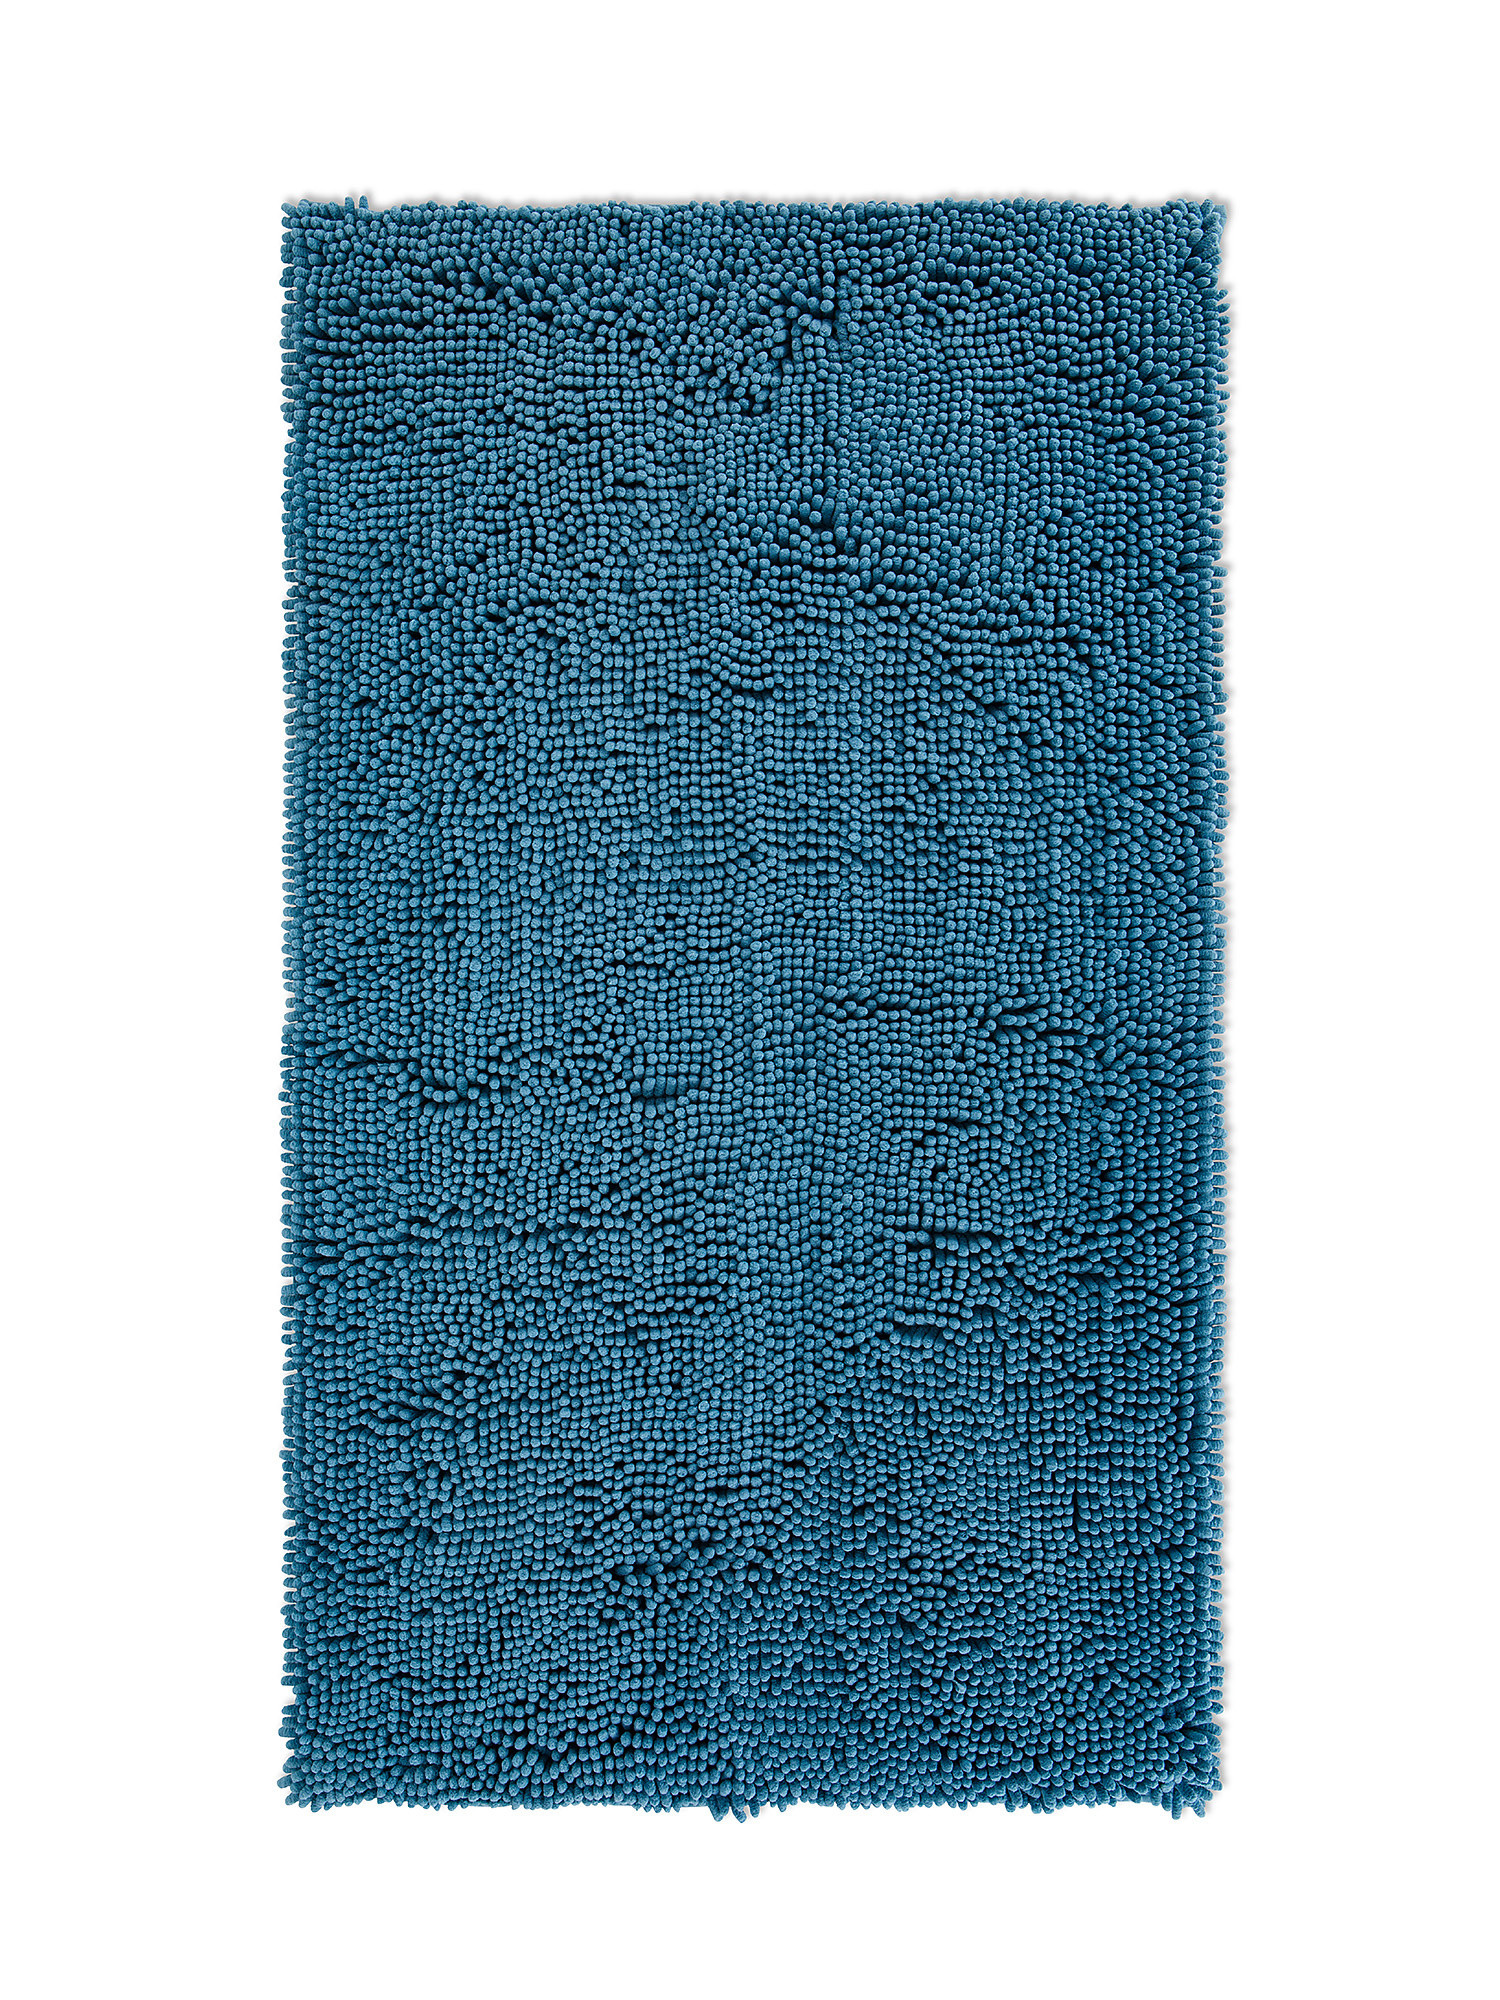 Tappeto bagno in microfibra shaggy Zefiro Gold, Blu avio, large image number 0